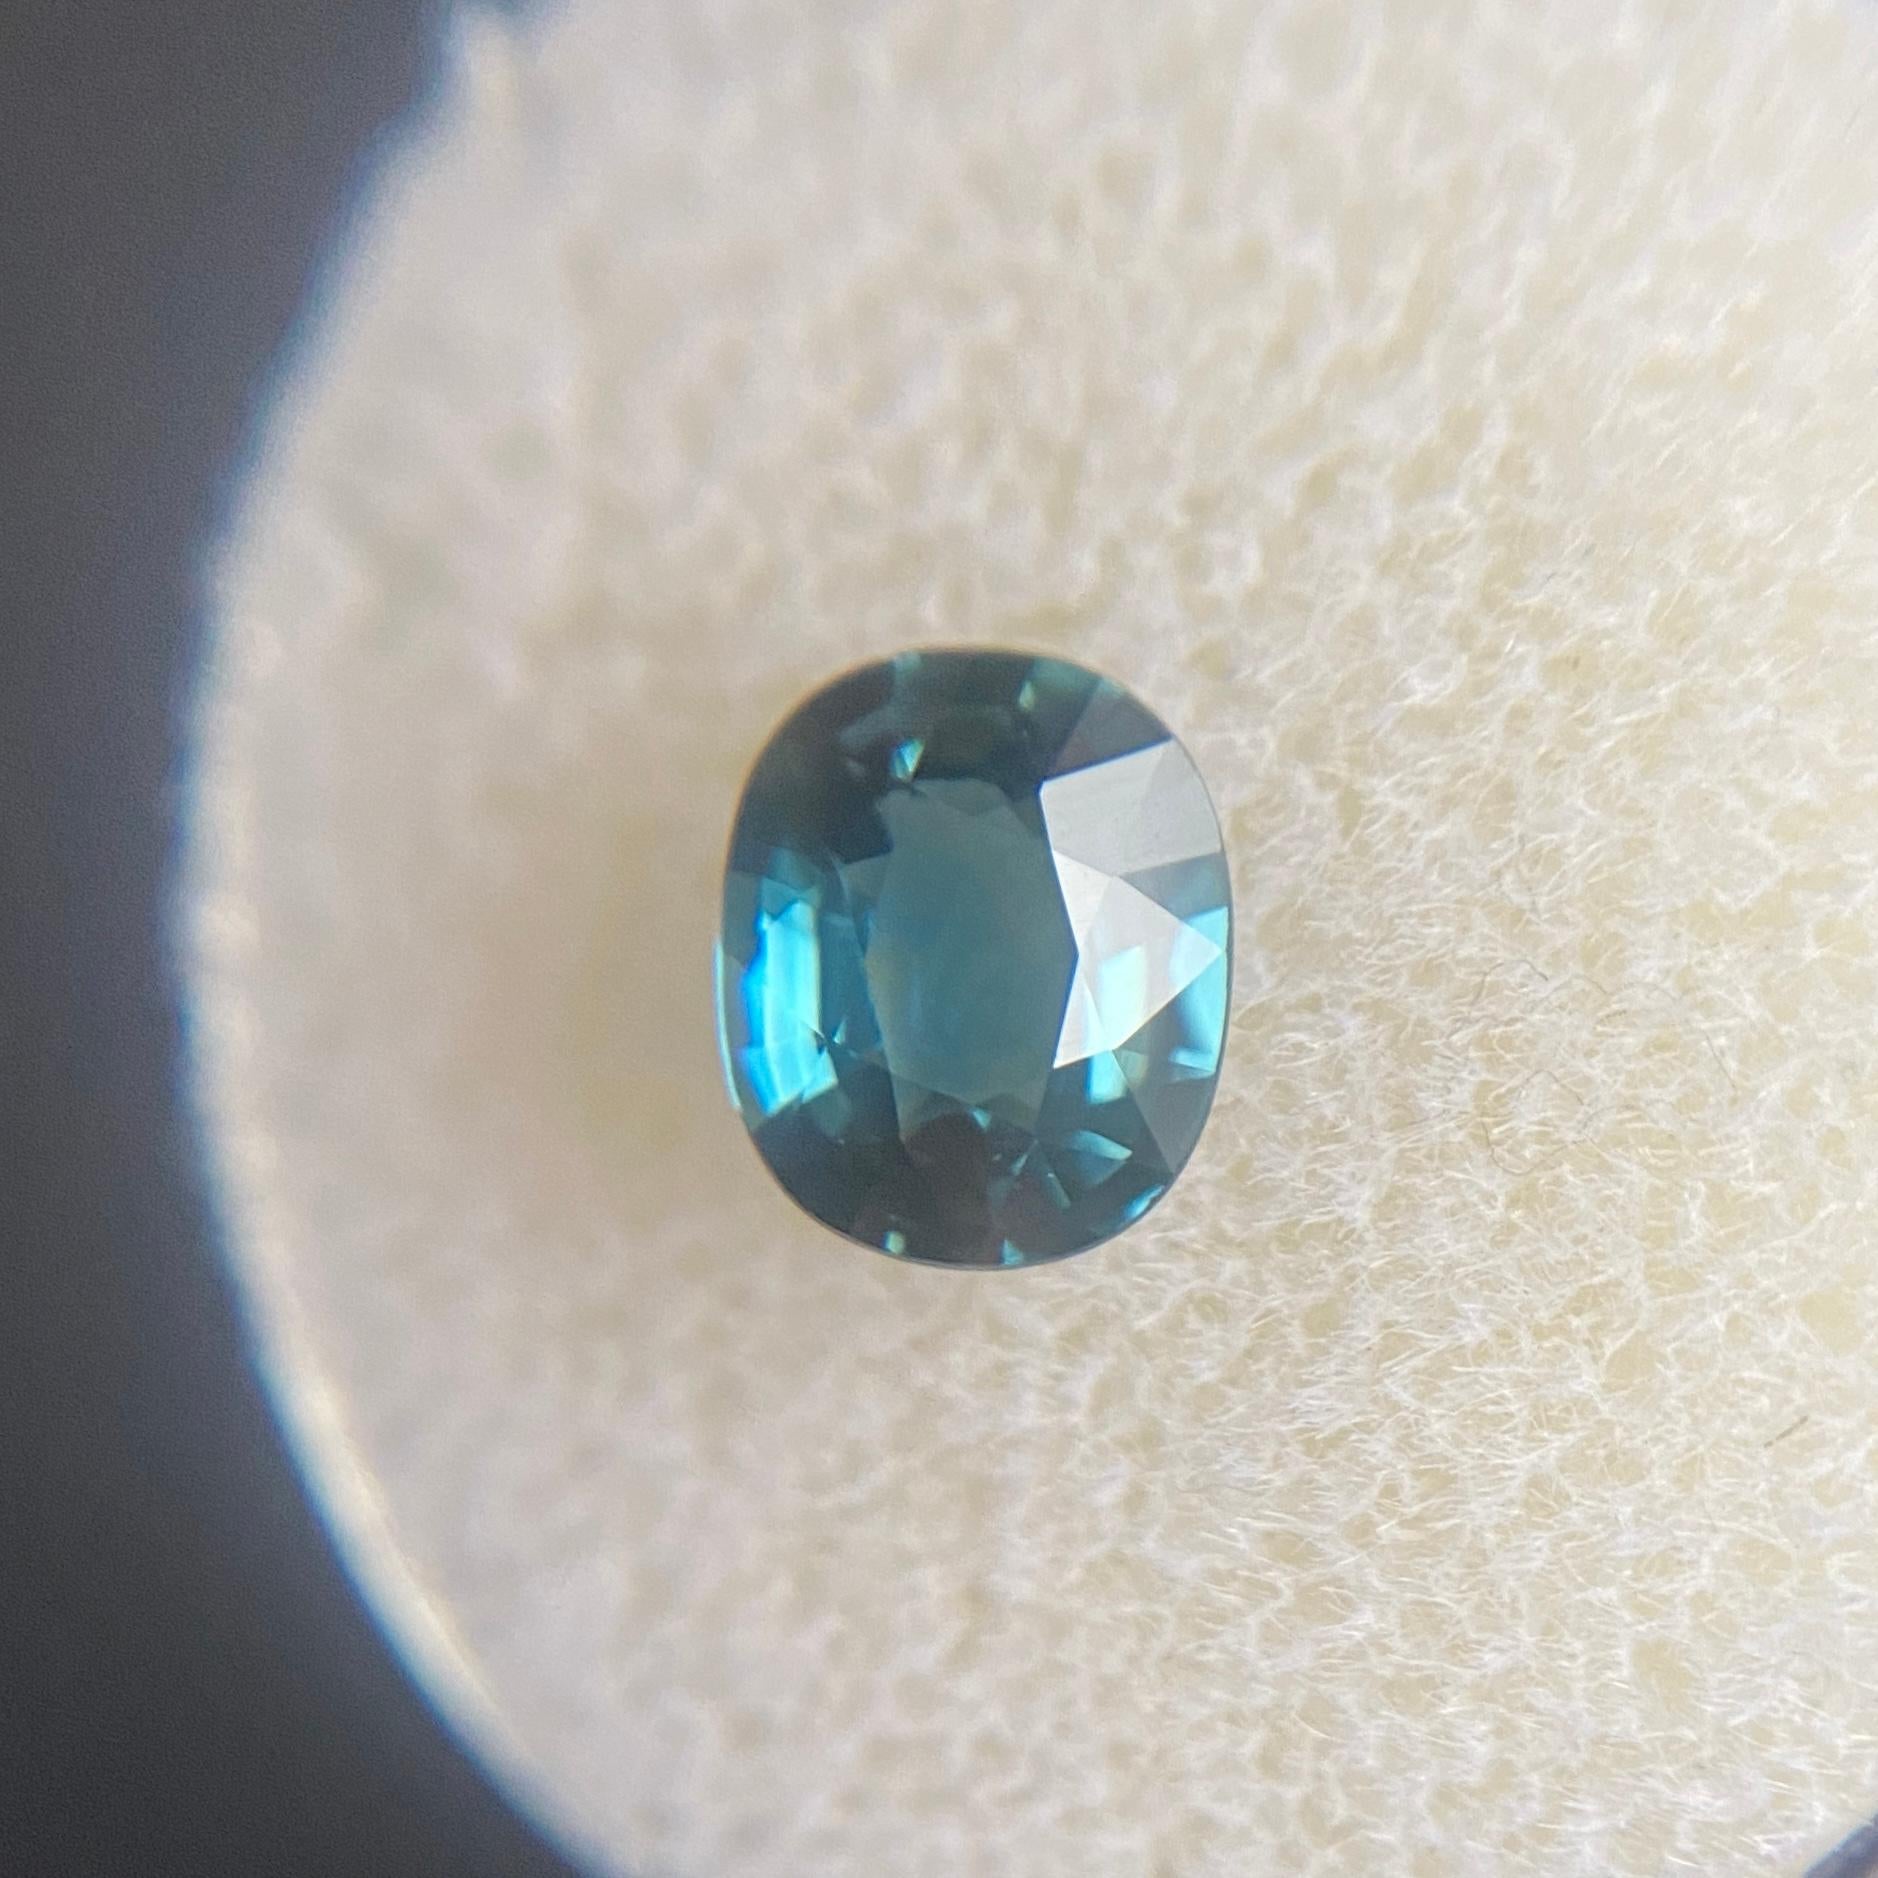 Fine Australia Indigo Blue Sapphire 1.35 Carat Oval Cut Rare Loose Gemstone 2